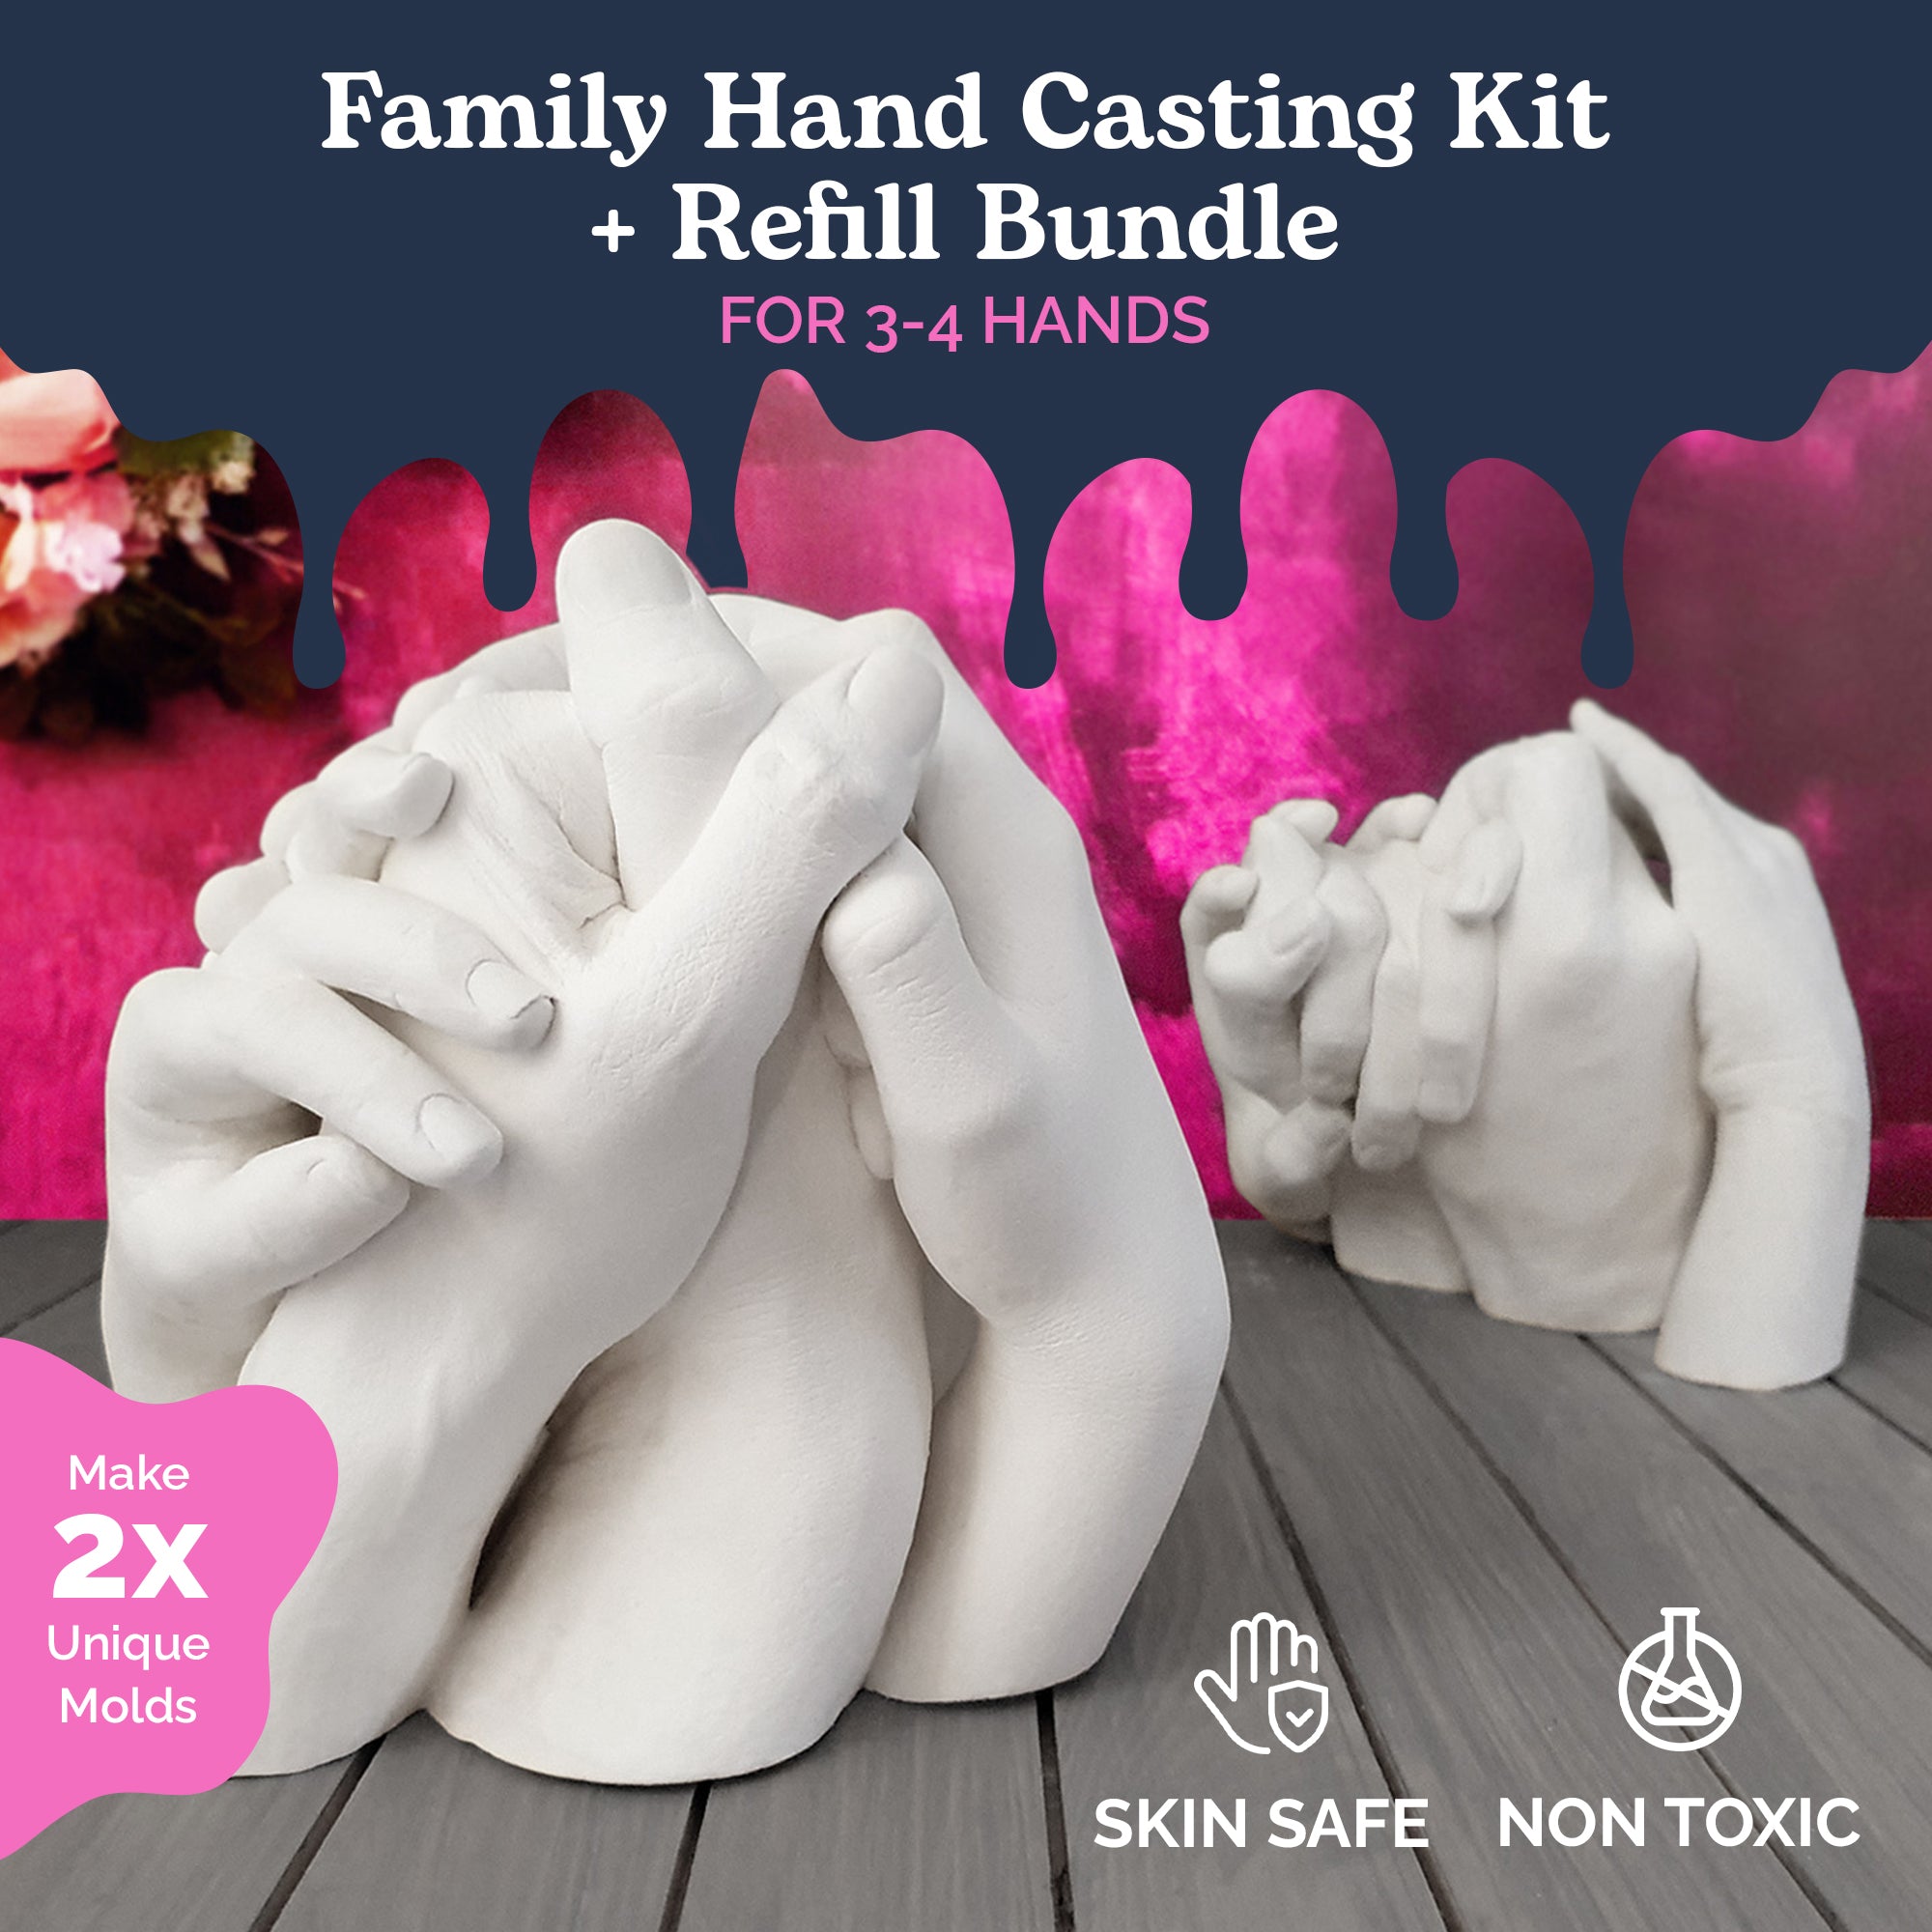 The Edinburgh Casting Studio Edinburgh Premium Hand Casting Kit Couples - Lifelike Stone Sculpture for Two DIY Hand Mold Mom Dad Gift Wedding